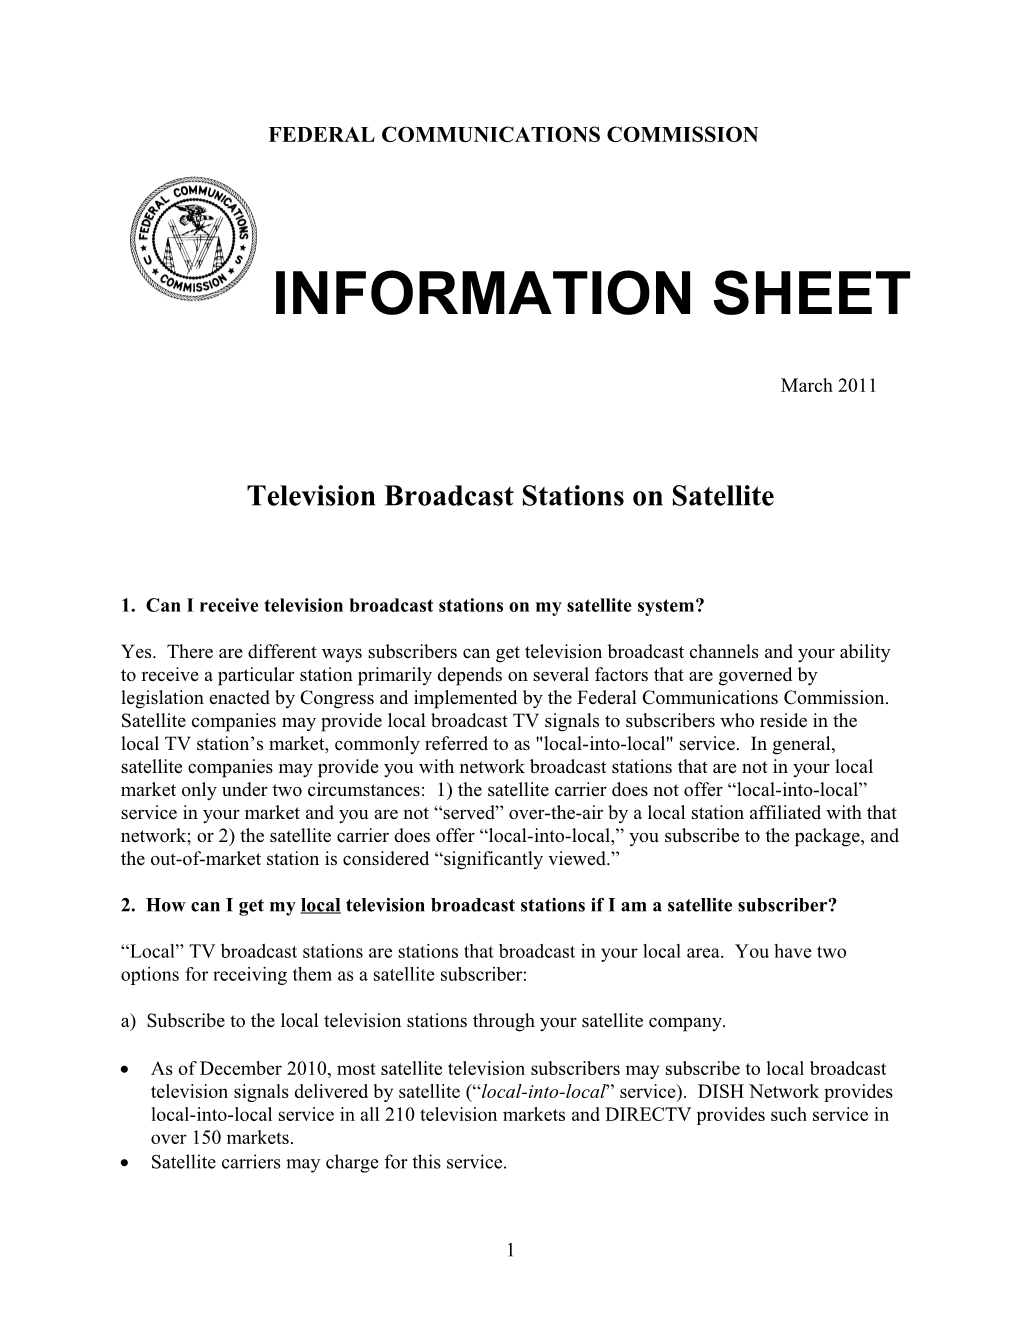 Satellite Home Viewer Improvement Act Fact Sheet